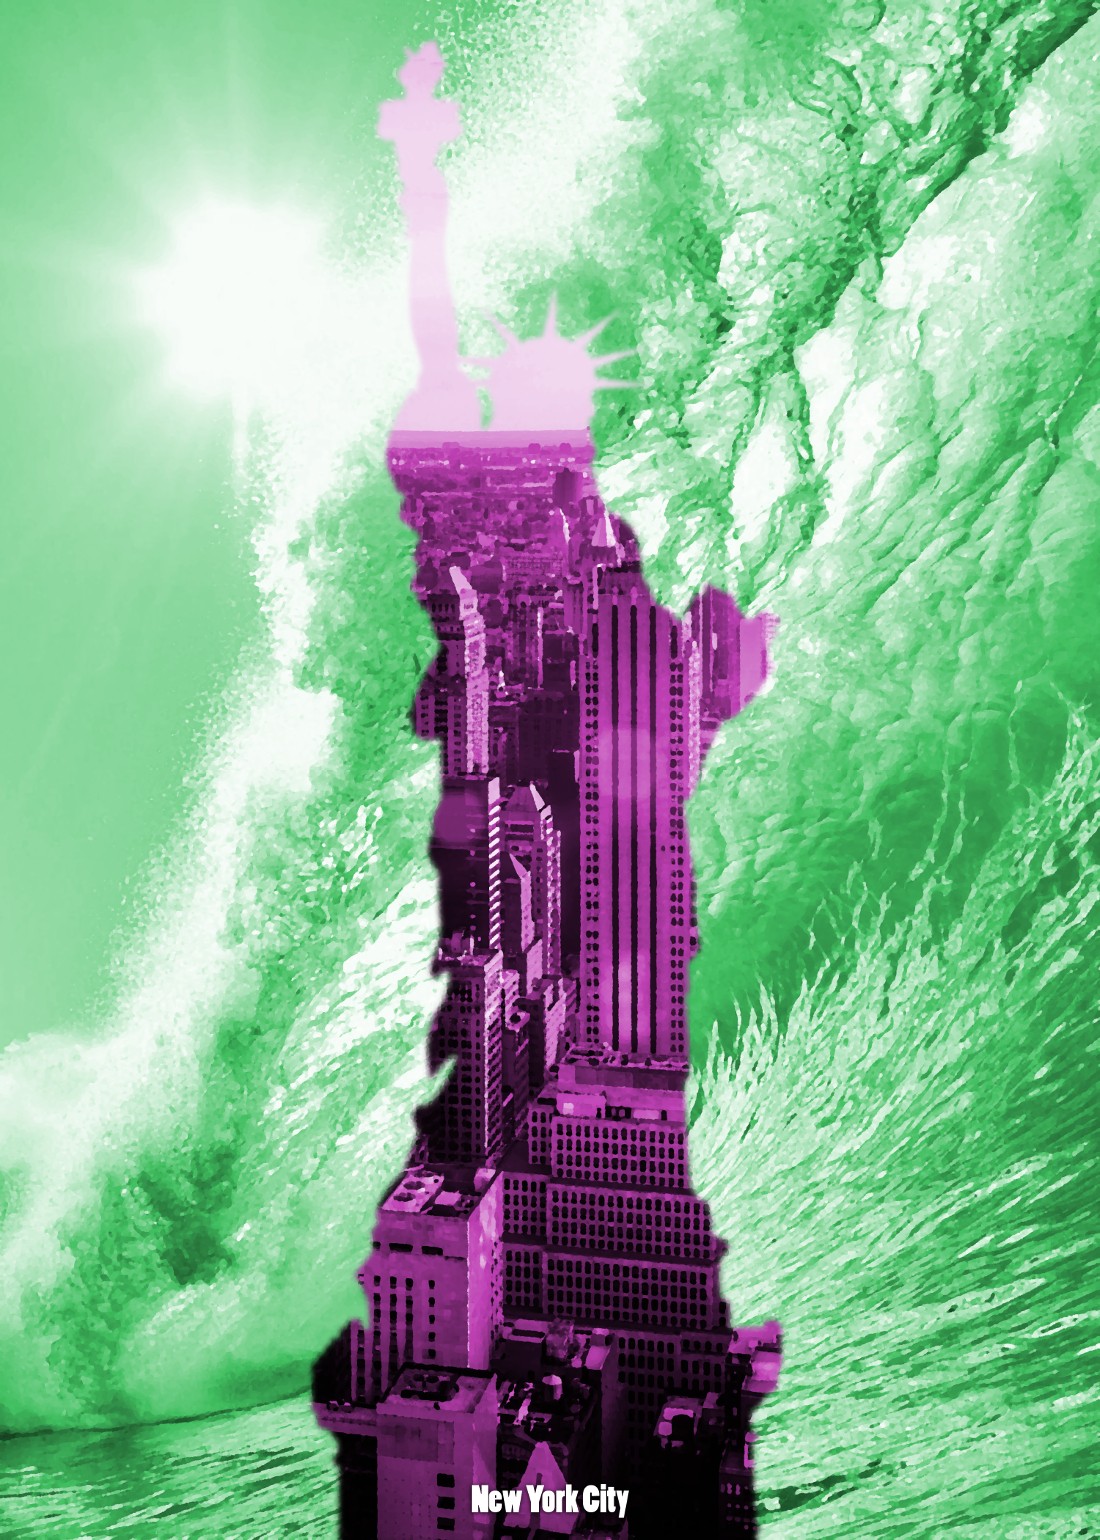 General 1100x1540 New York City Statue of Liberty statue water city artwork digital art